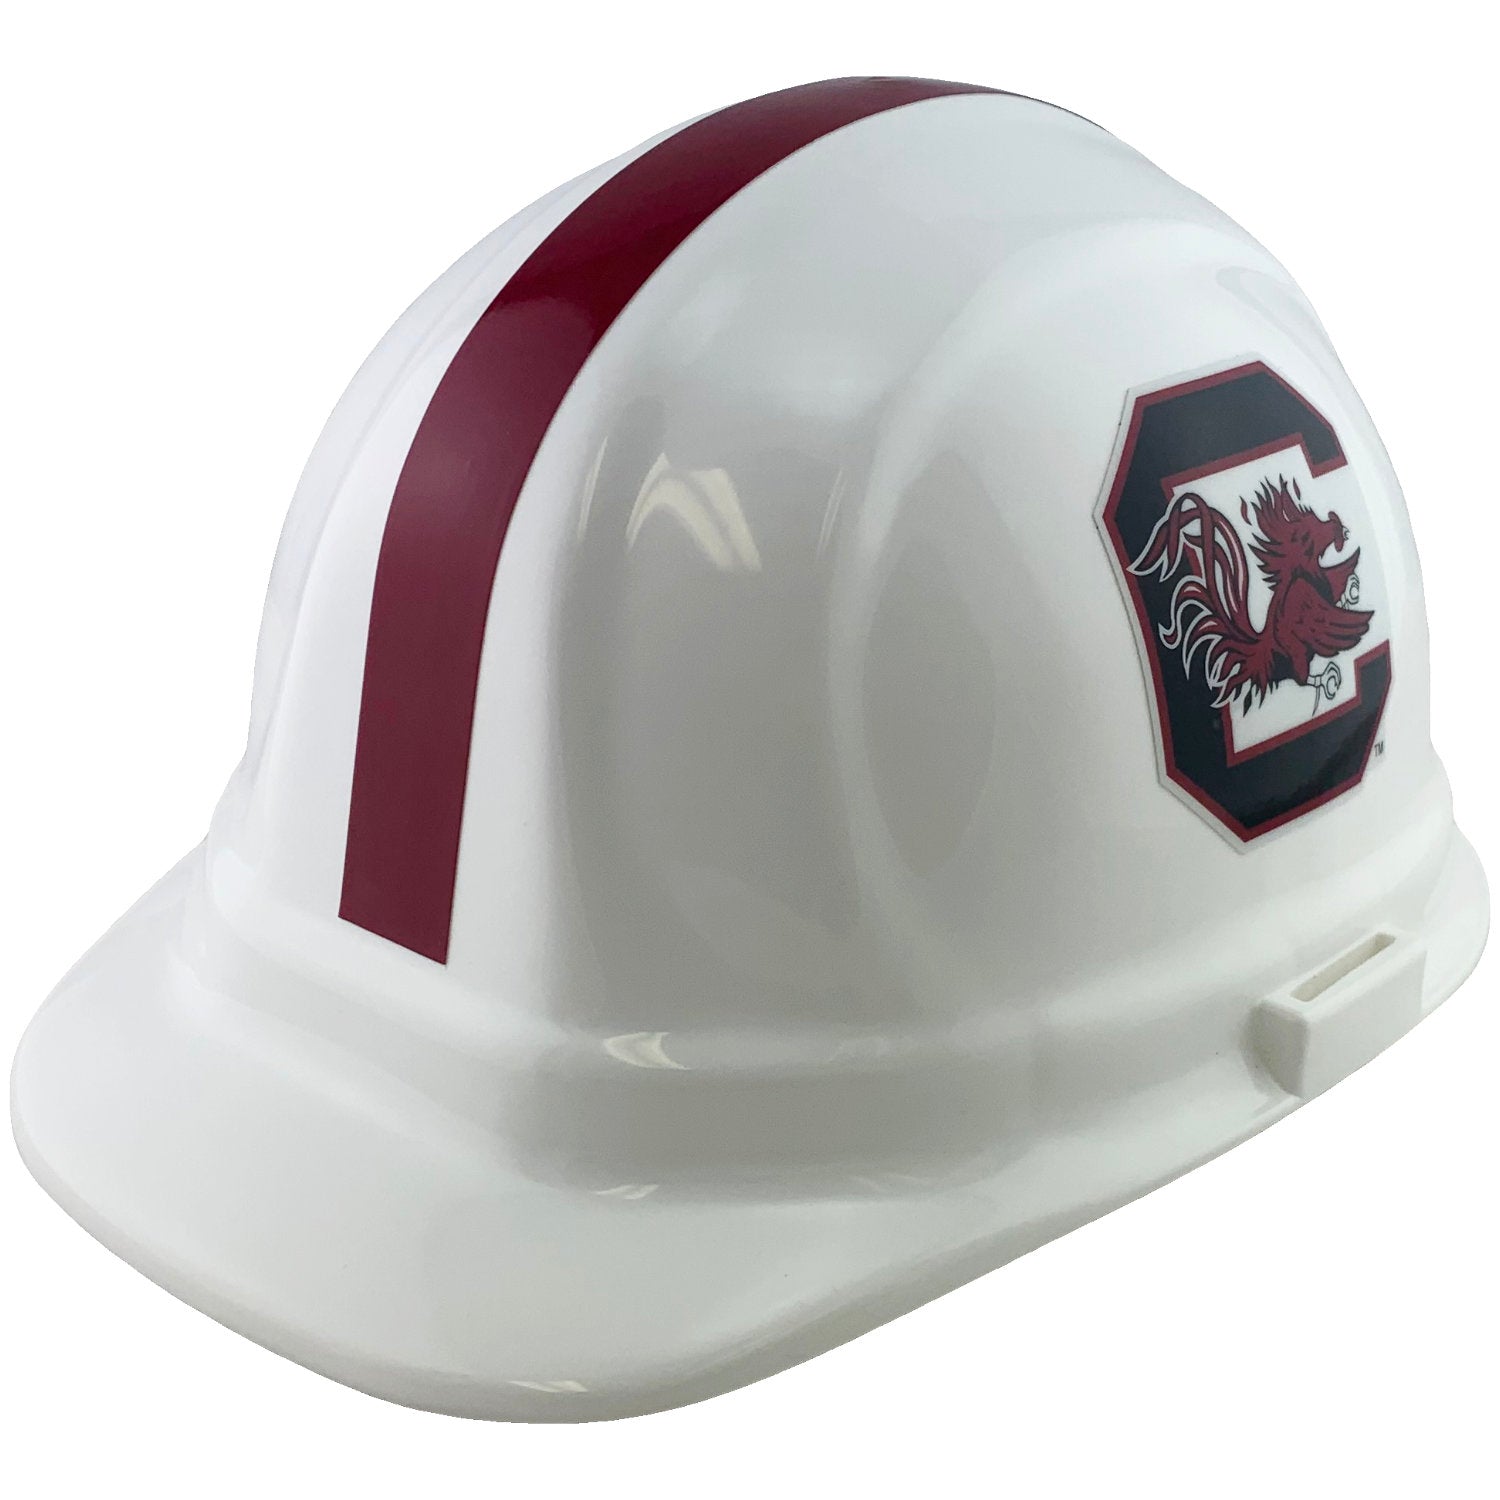 South Carolina Game Cocks - NCAA Team Logo Hard Hat Helmet